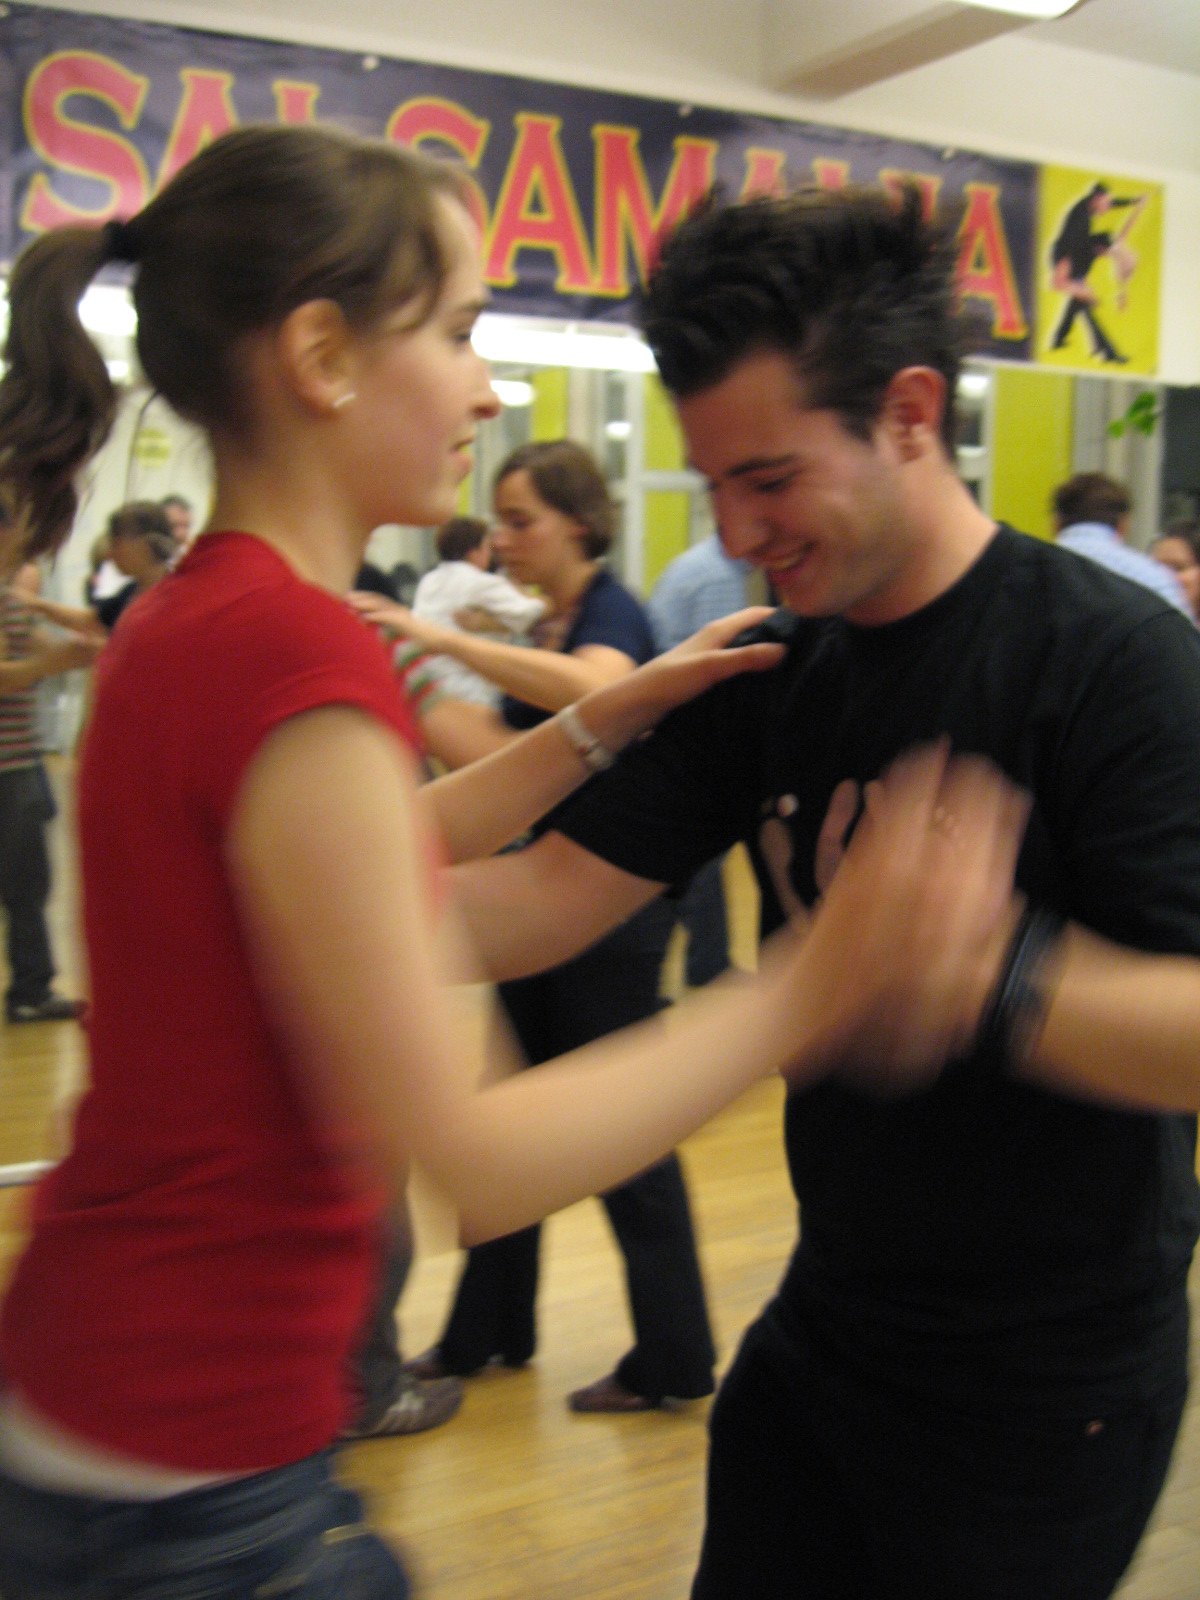 Salsa-Tanzschule Luzern